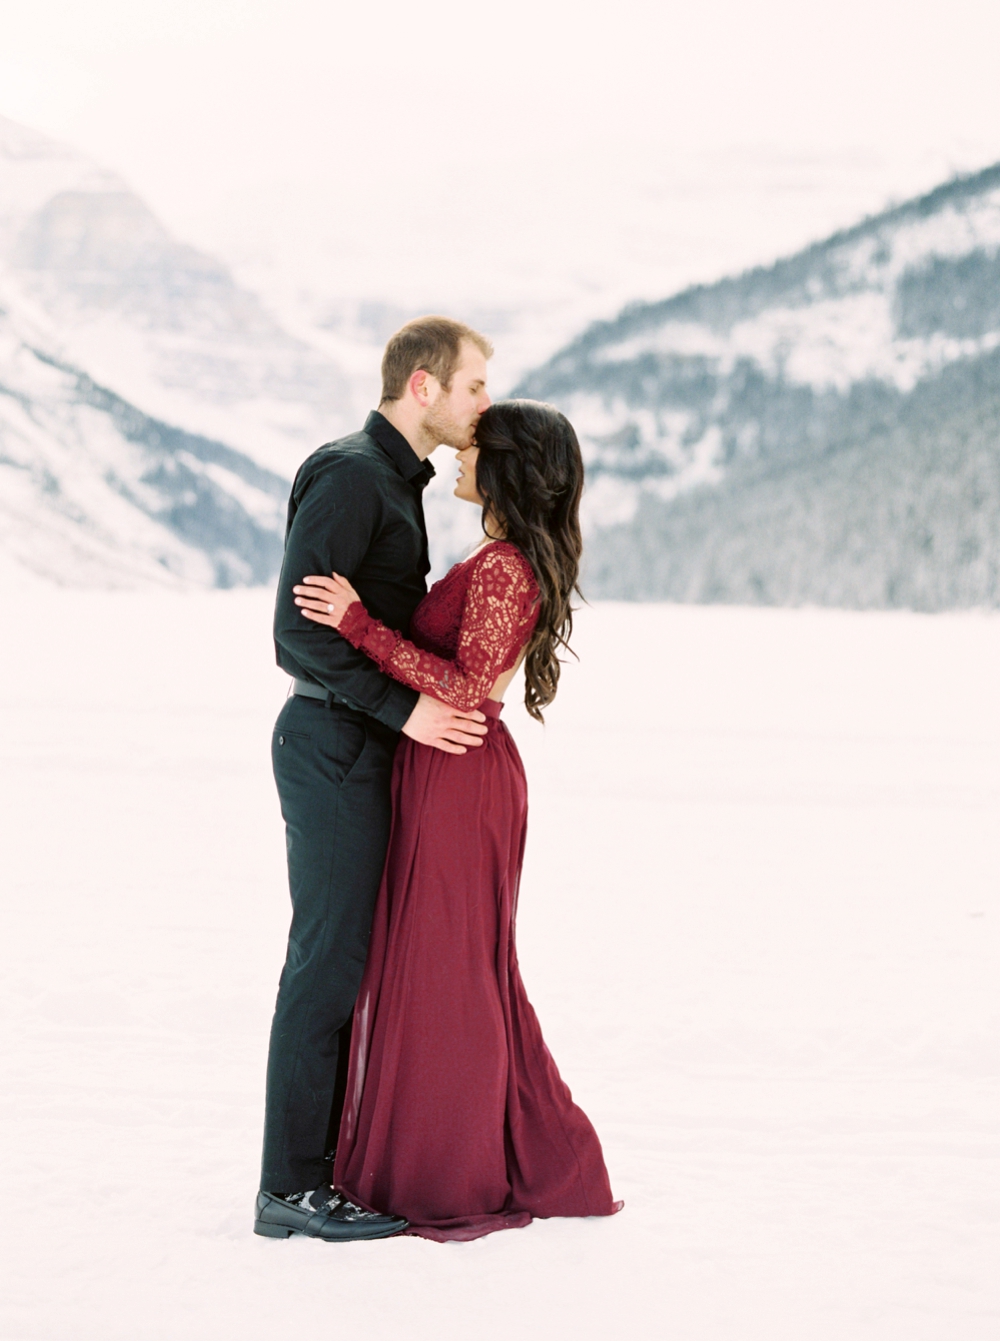 Lake Louise Wedding Photographer | Lake Louise Engagement Session | Winter snowy session | Rocky Mountains | Calgary wedding photography